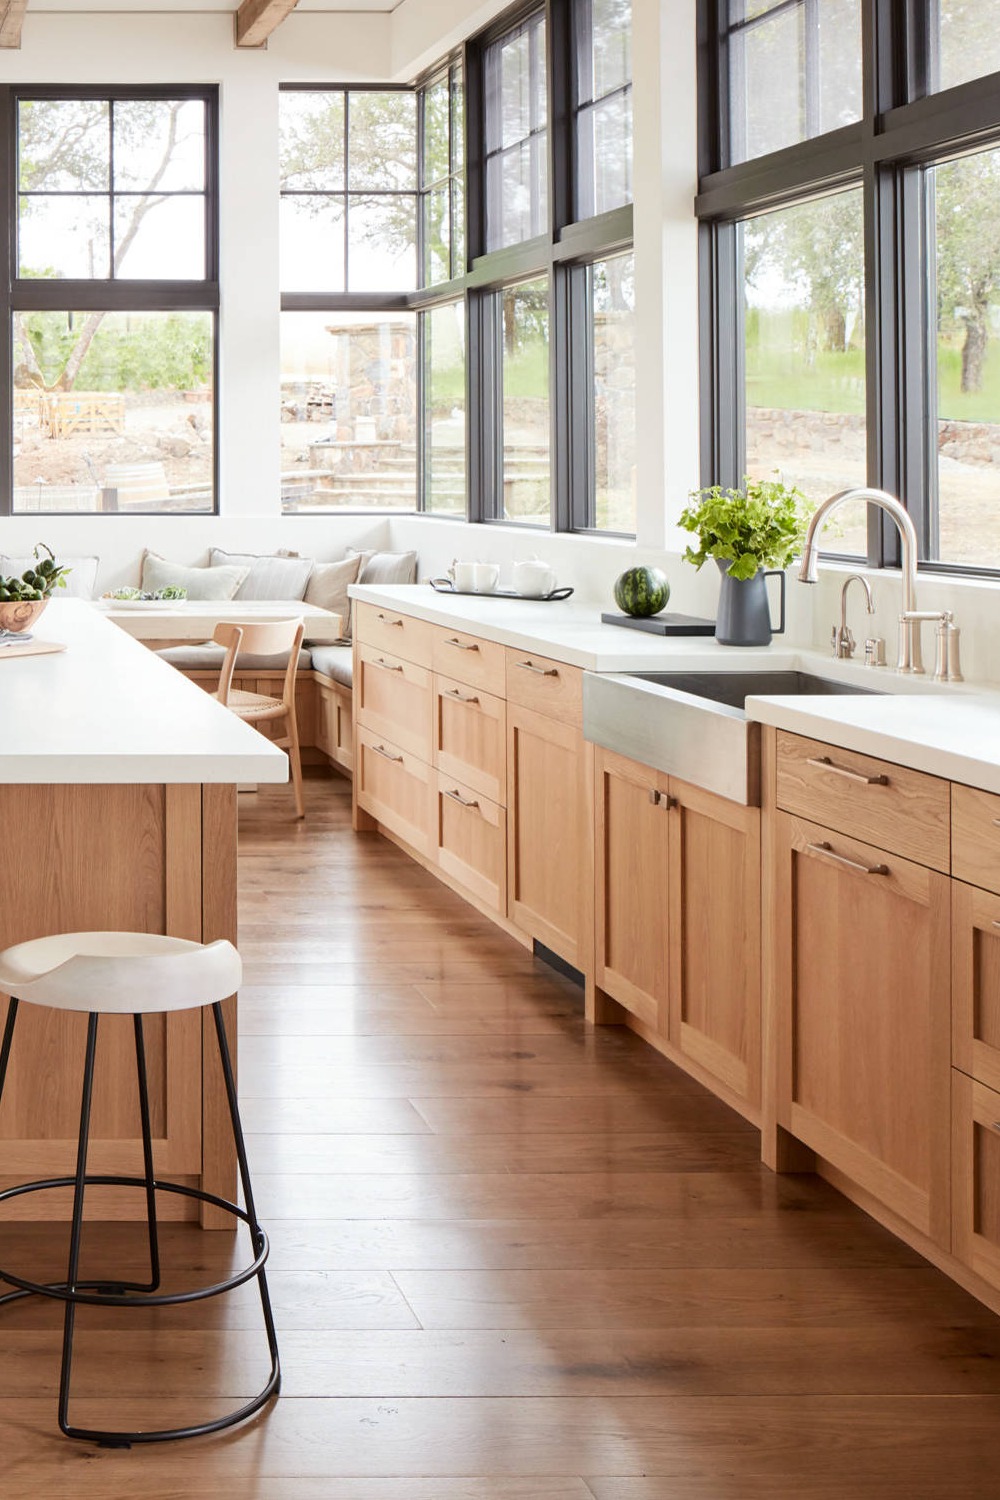 Medium Tone Wood Cabinets White Quartz Countertops Backsplash Farmhouse Sink